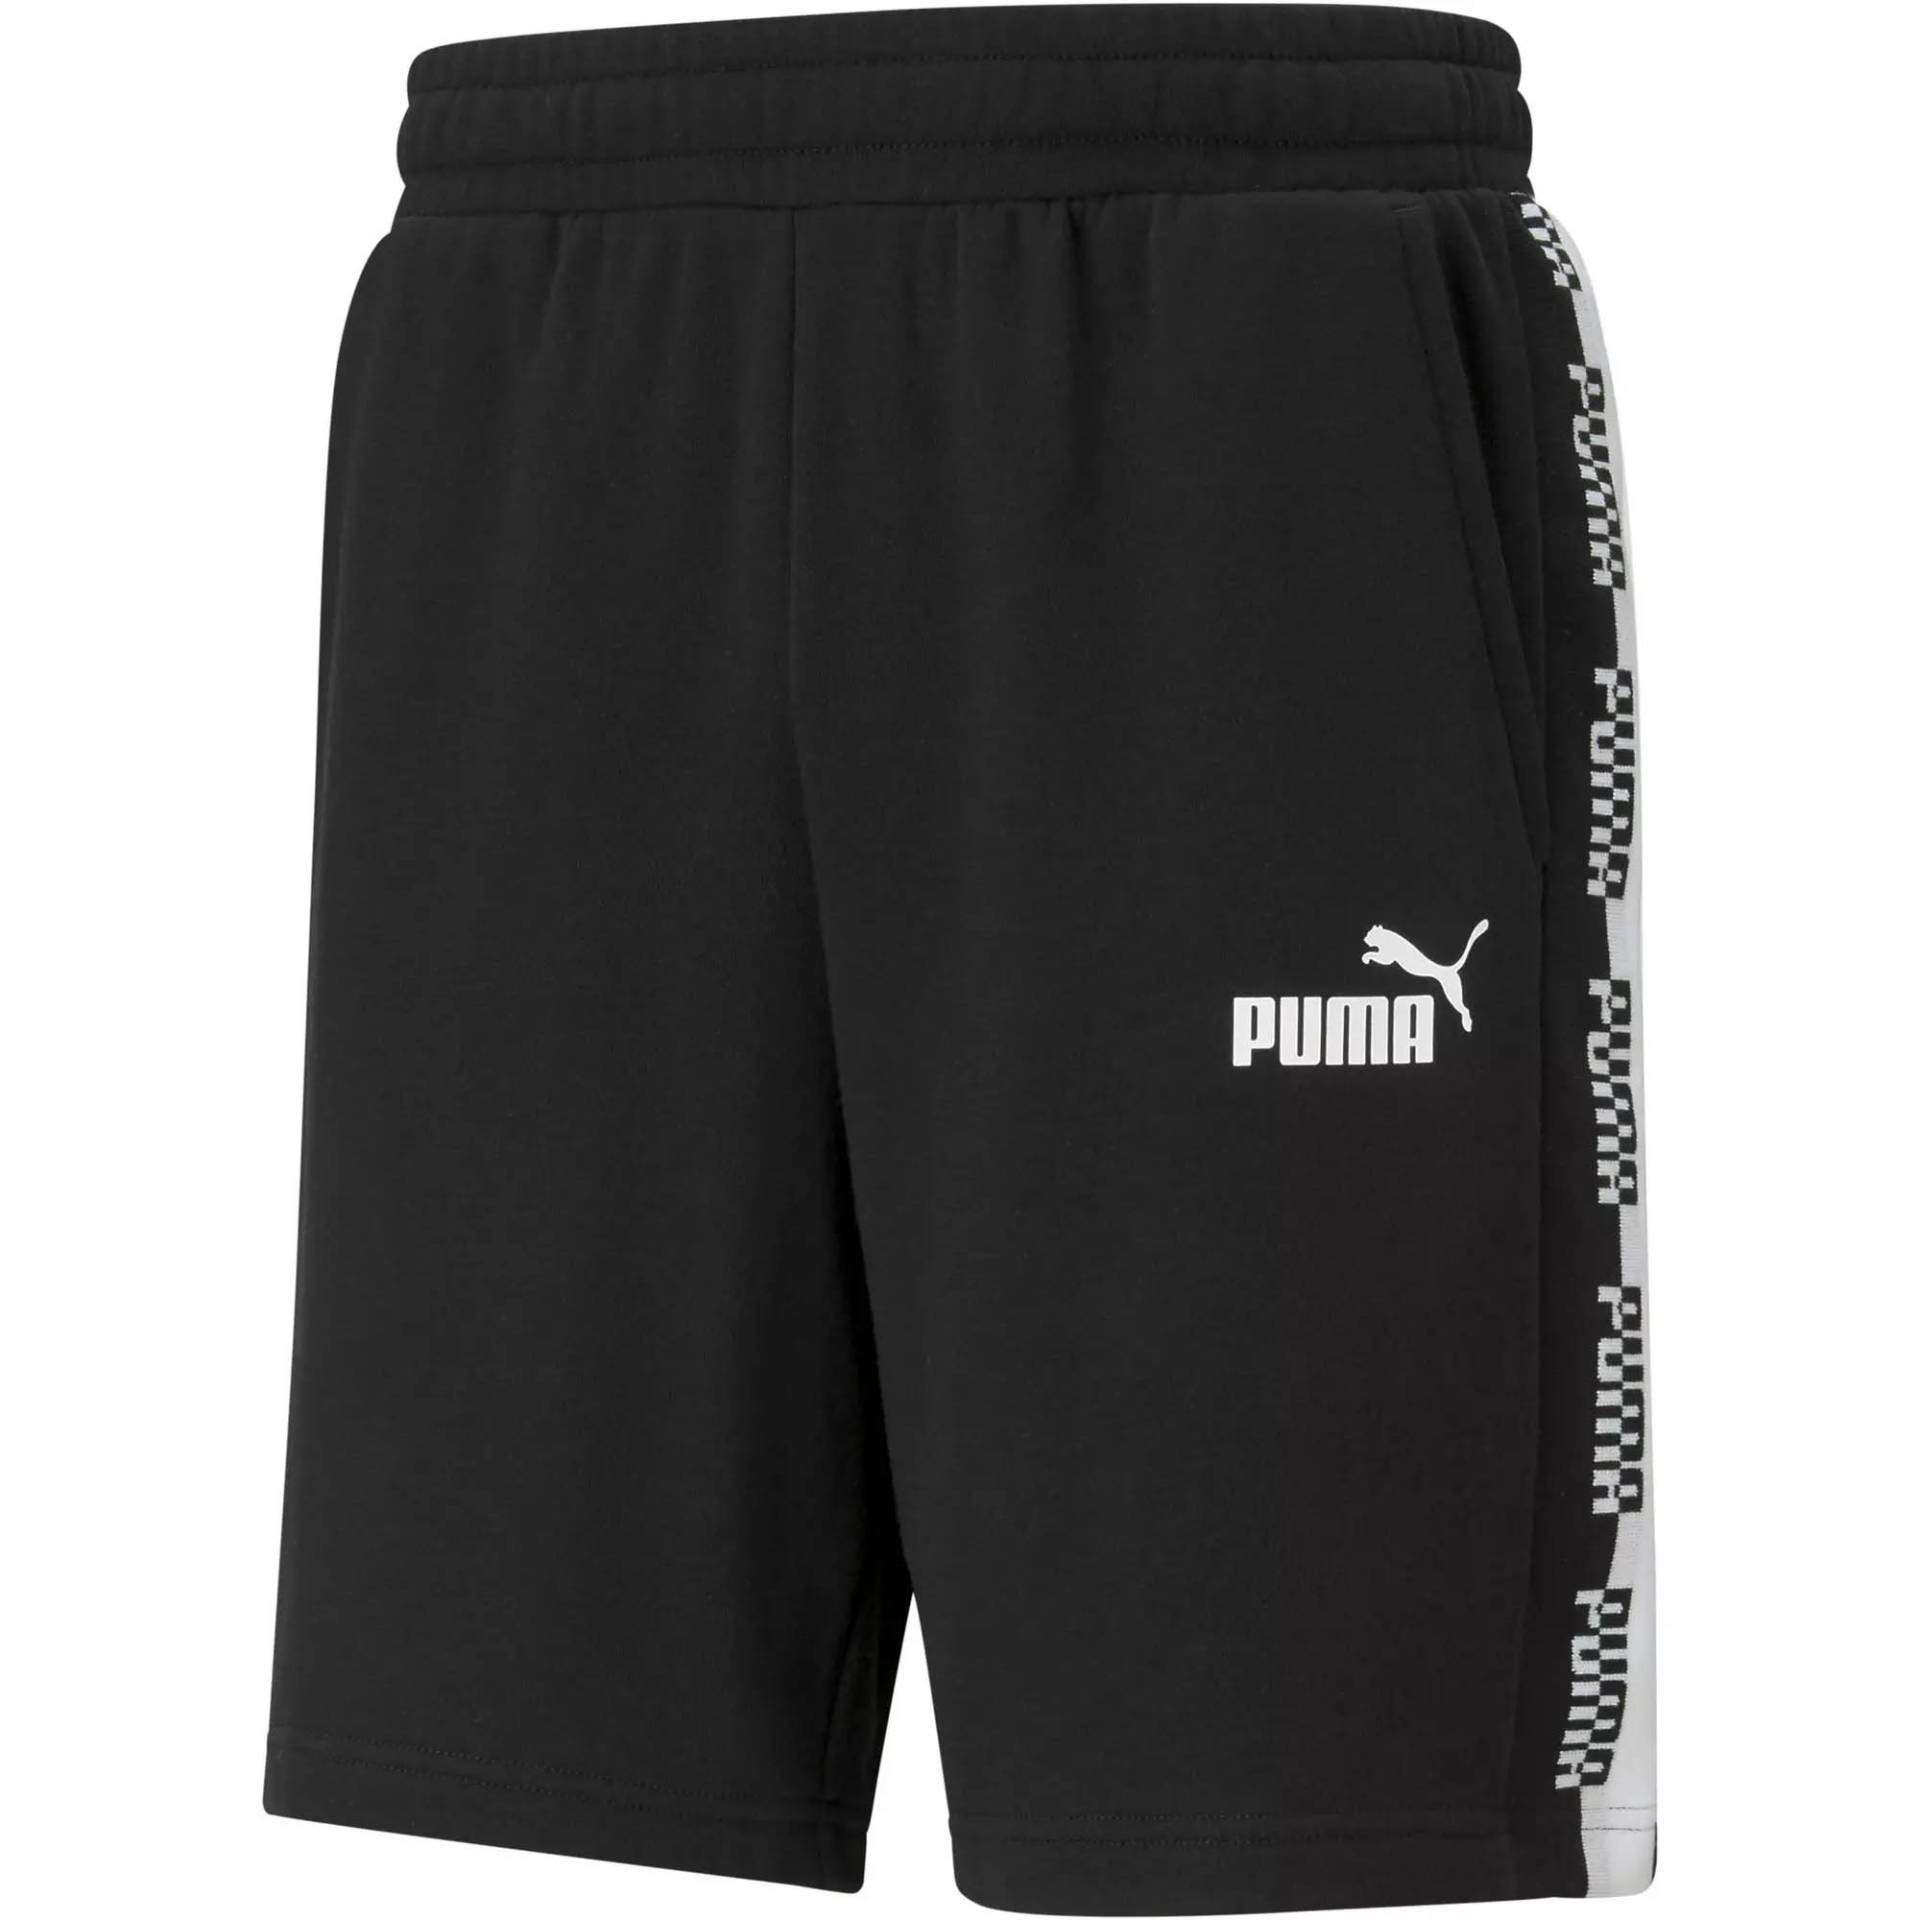 PUMA Amplified Shorts 9 TR Sporthose Trainingshose Übergröße 585786 01 schwarz von Puma